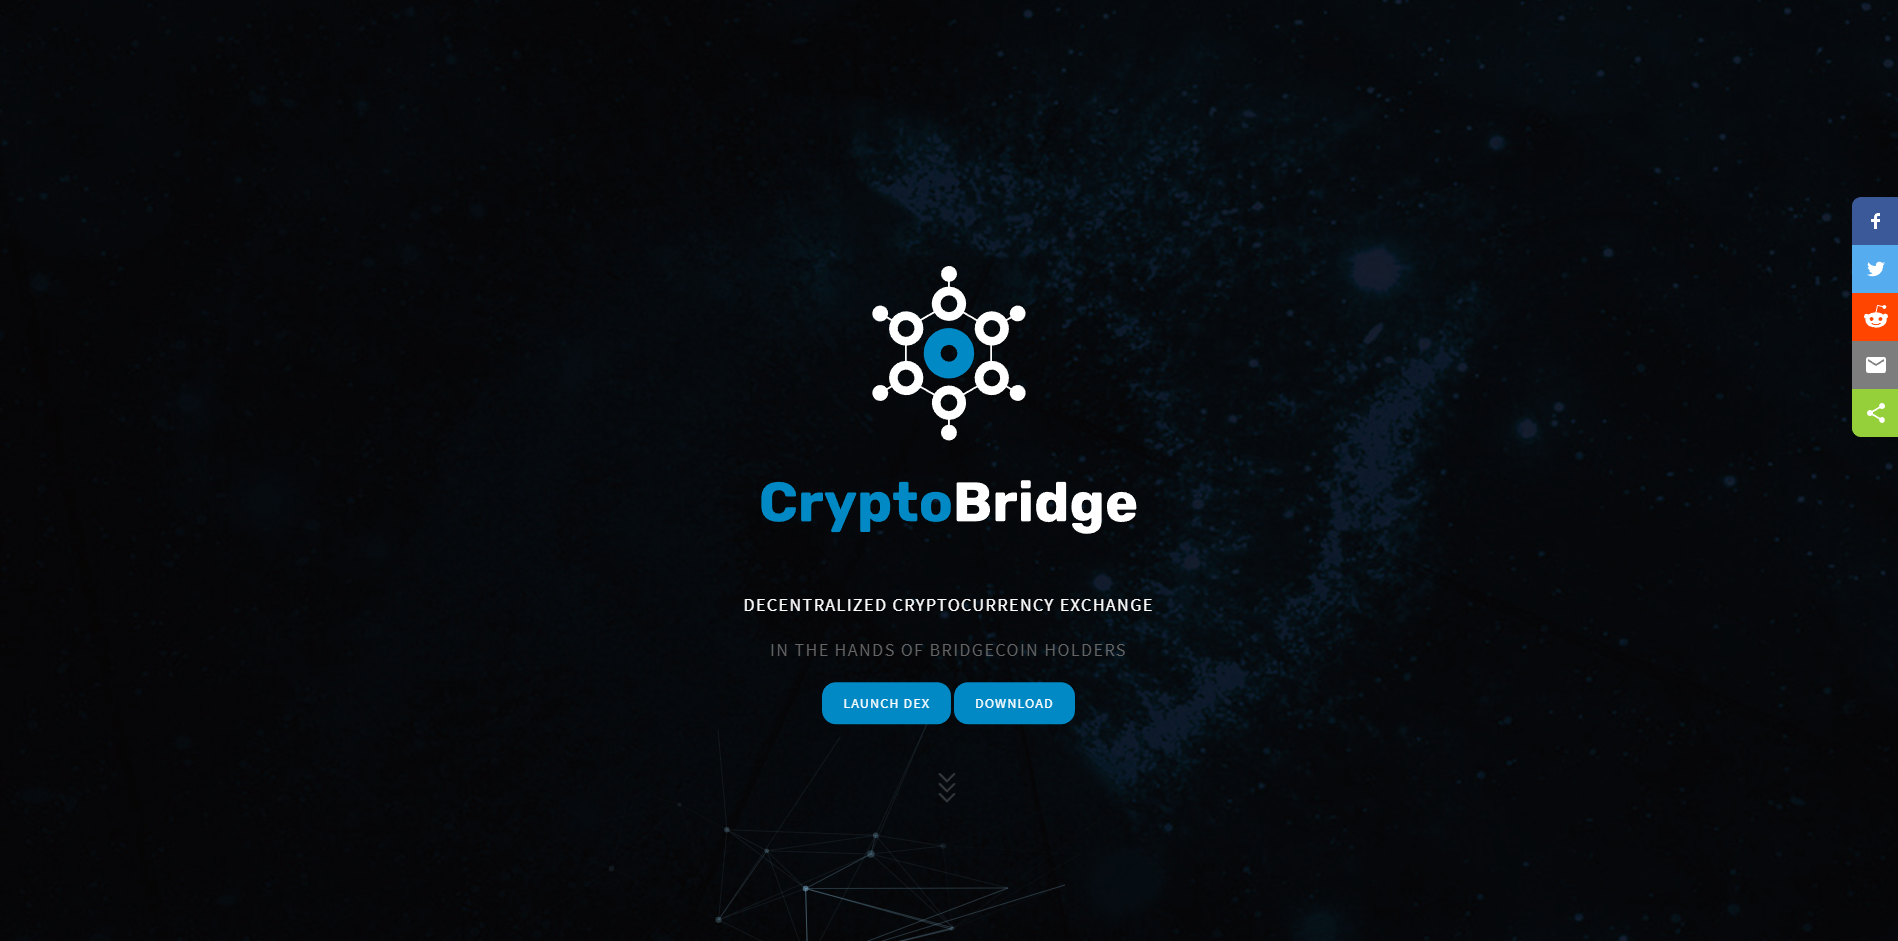 Madstar is listed on Crypto Bridge